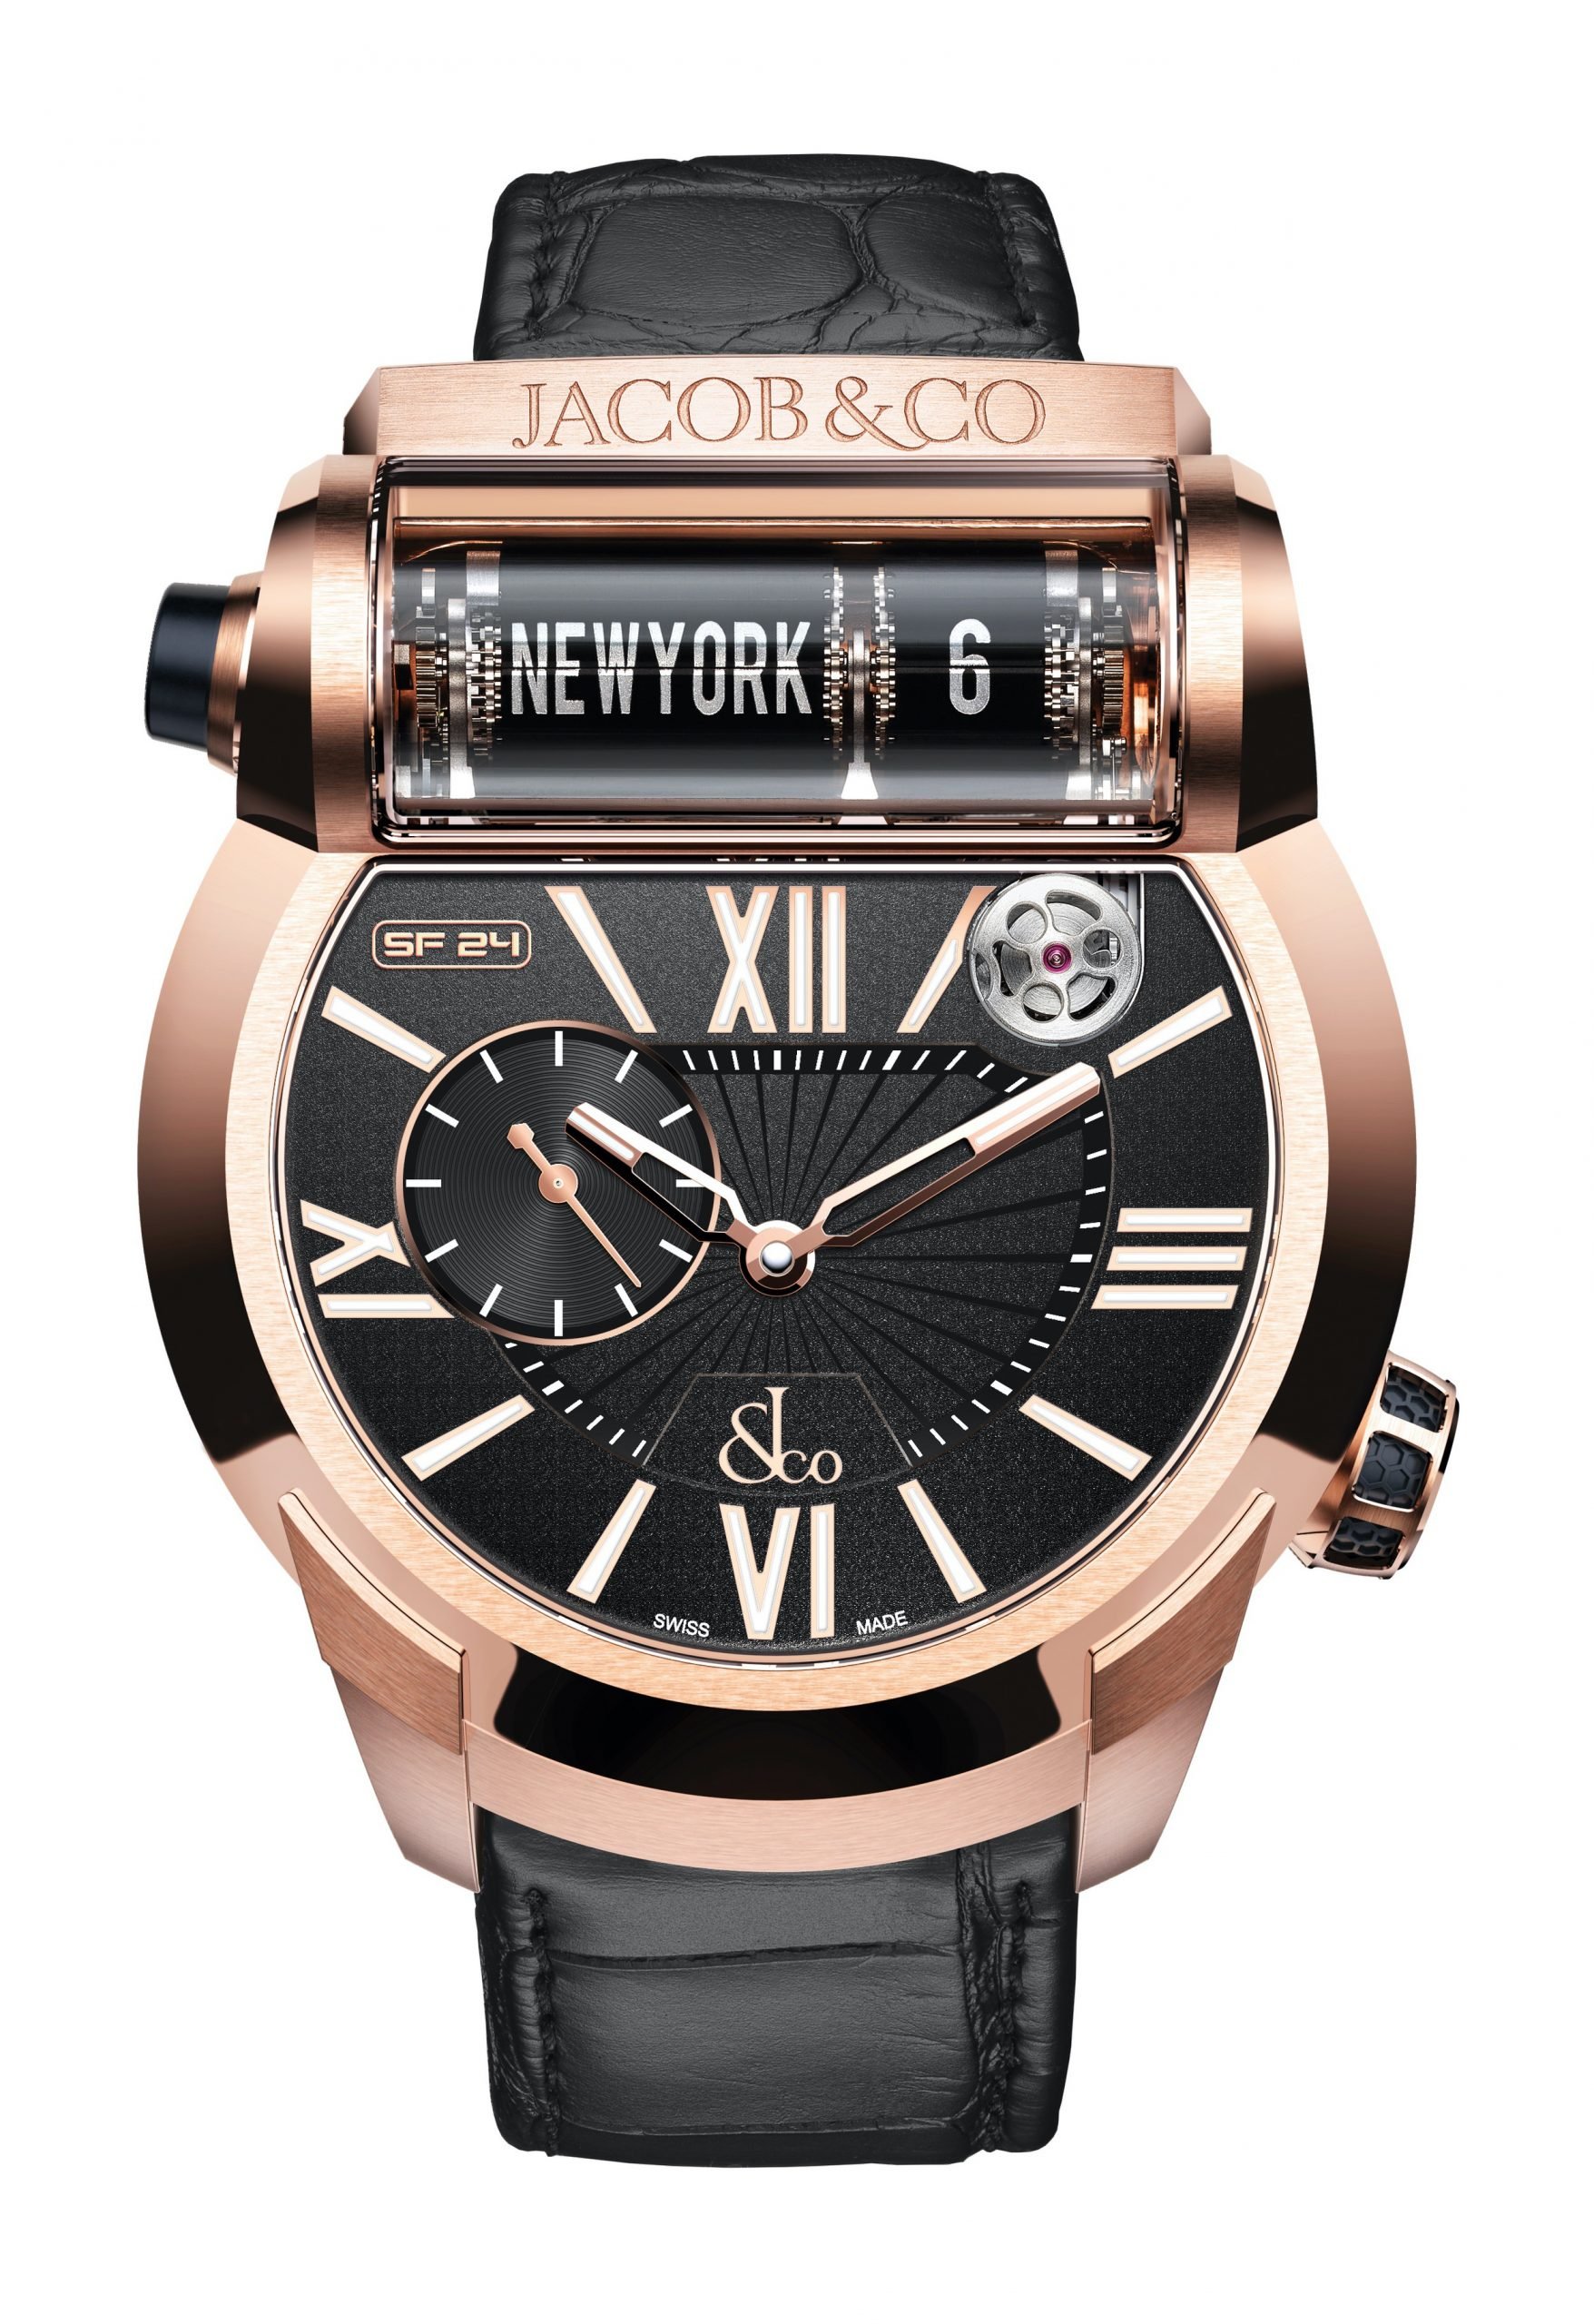 Jacob & Co Epic SF24 replica watch ES101.40.NS.LR.A - Click Image to Close